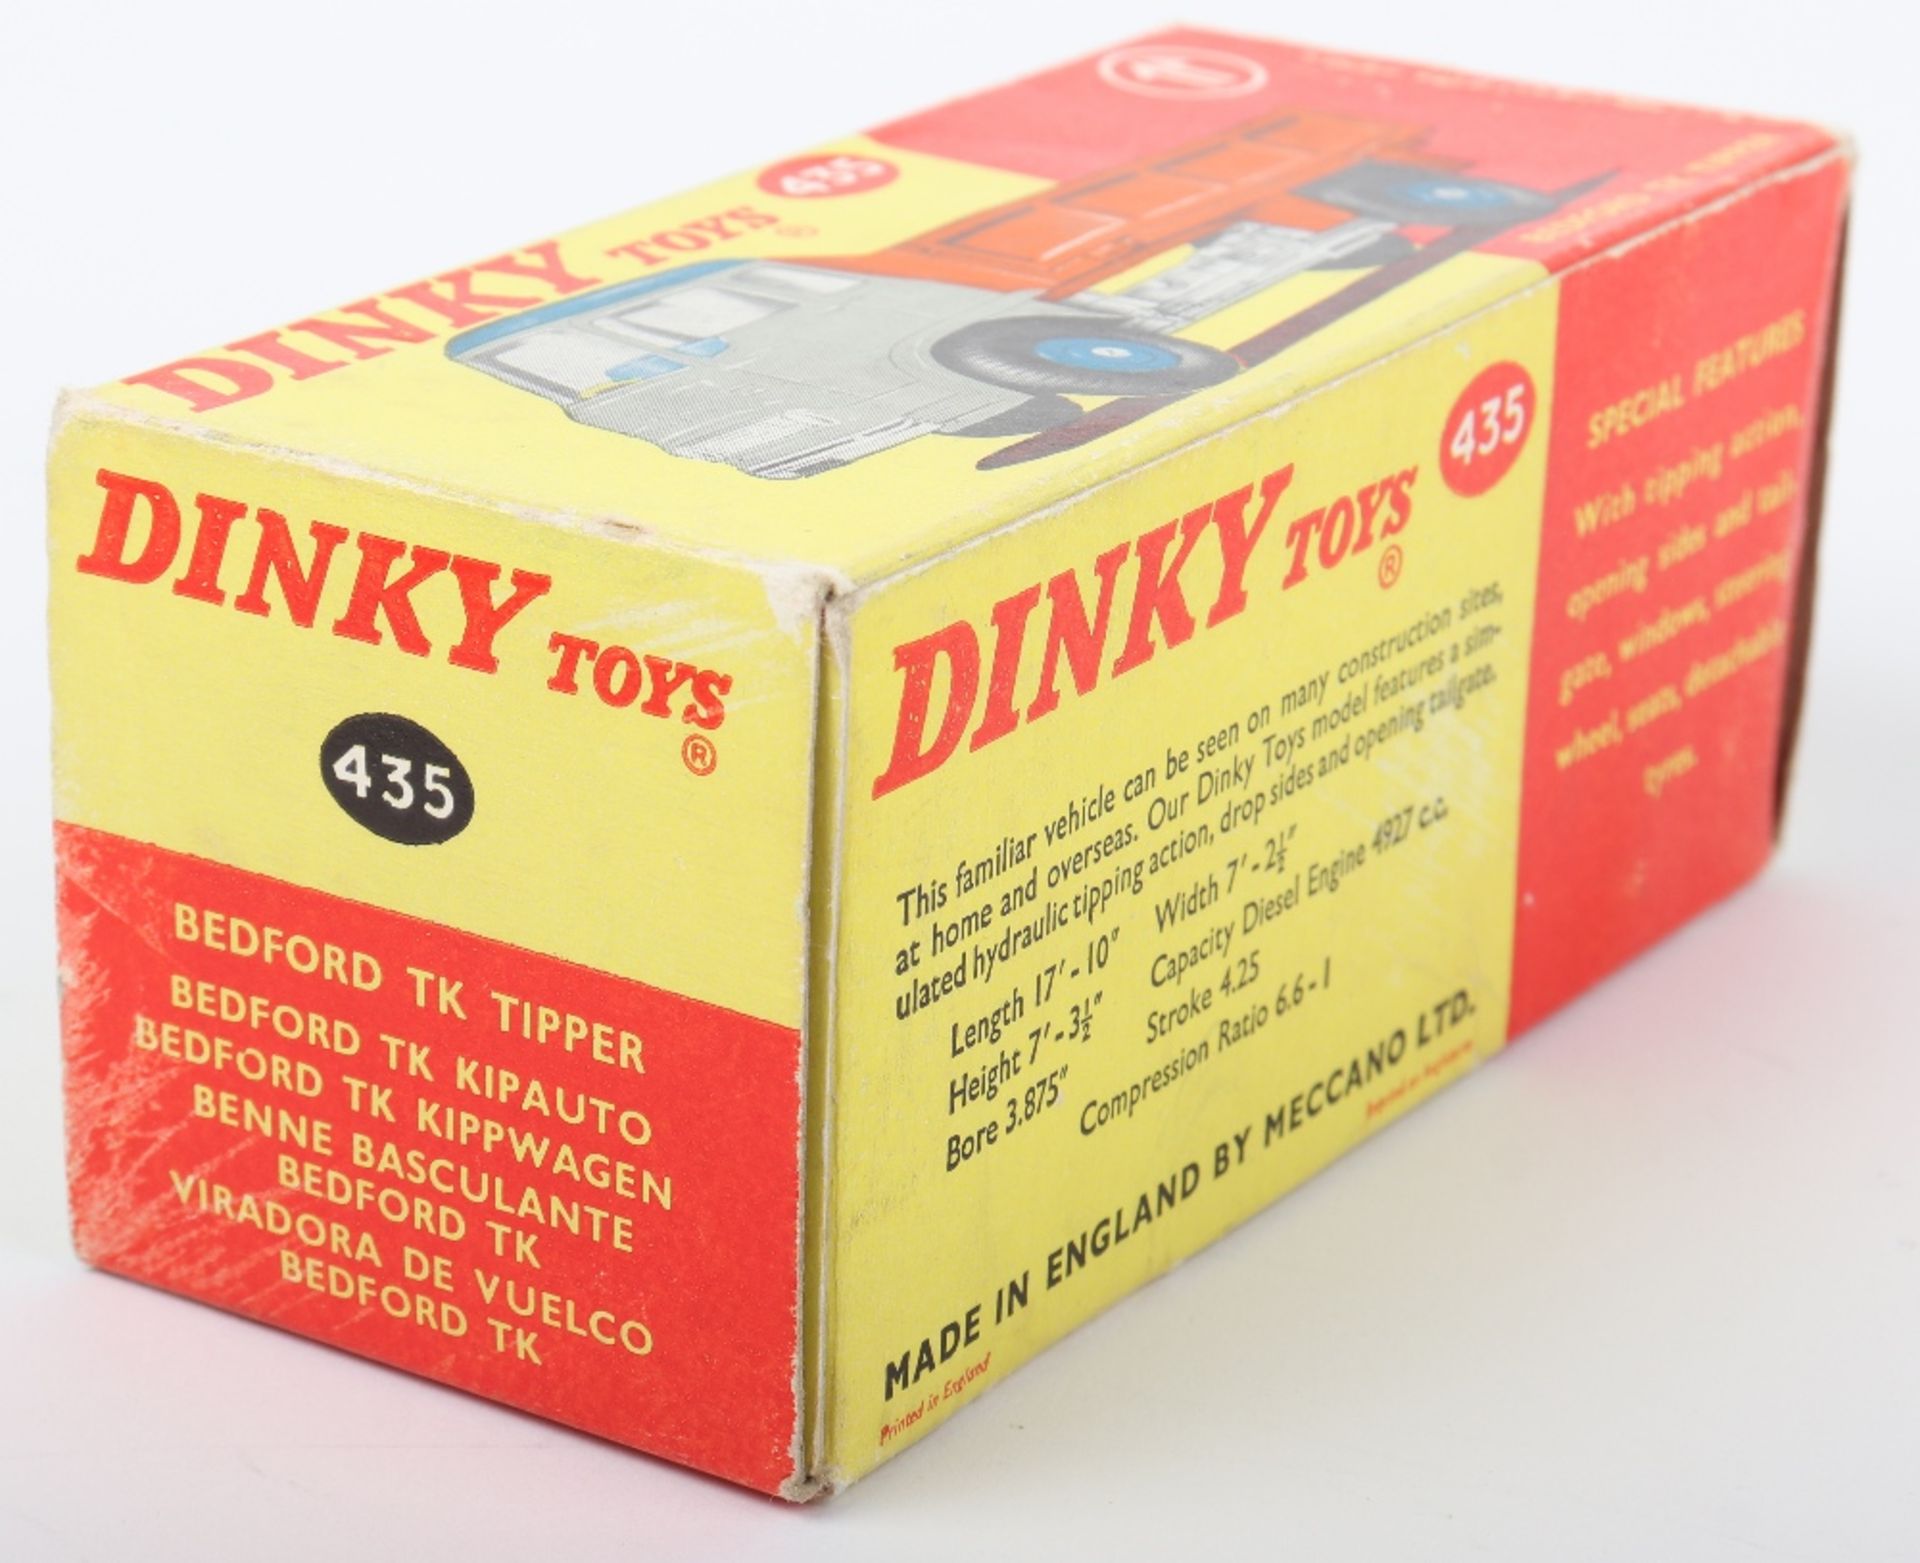 Dinky Toys 435 Bedford TK Tipper - Bild 5 aus 5